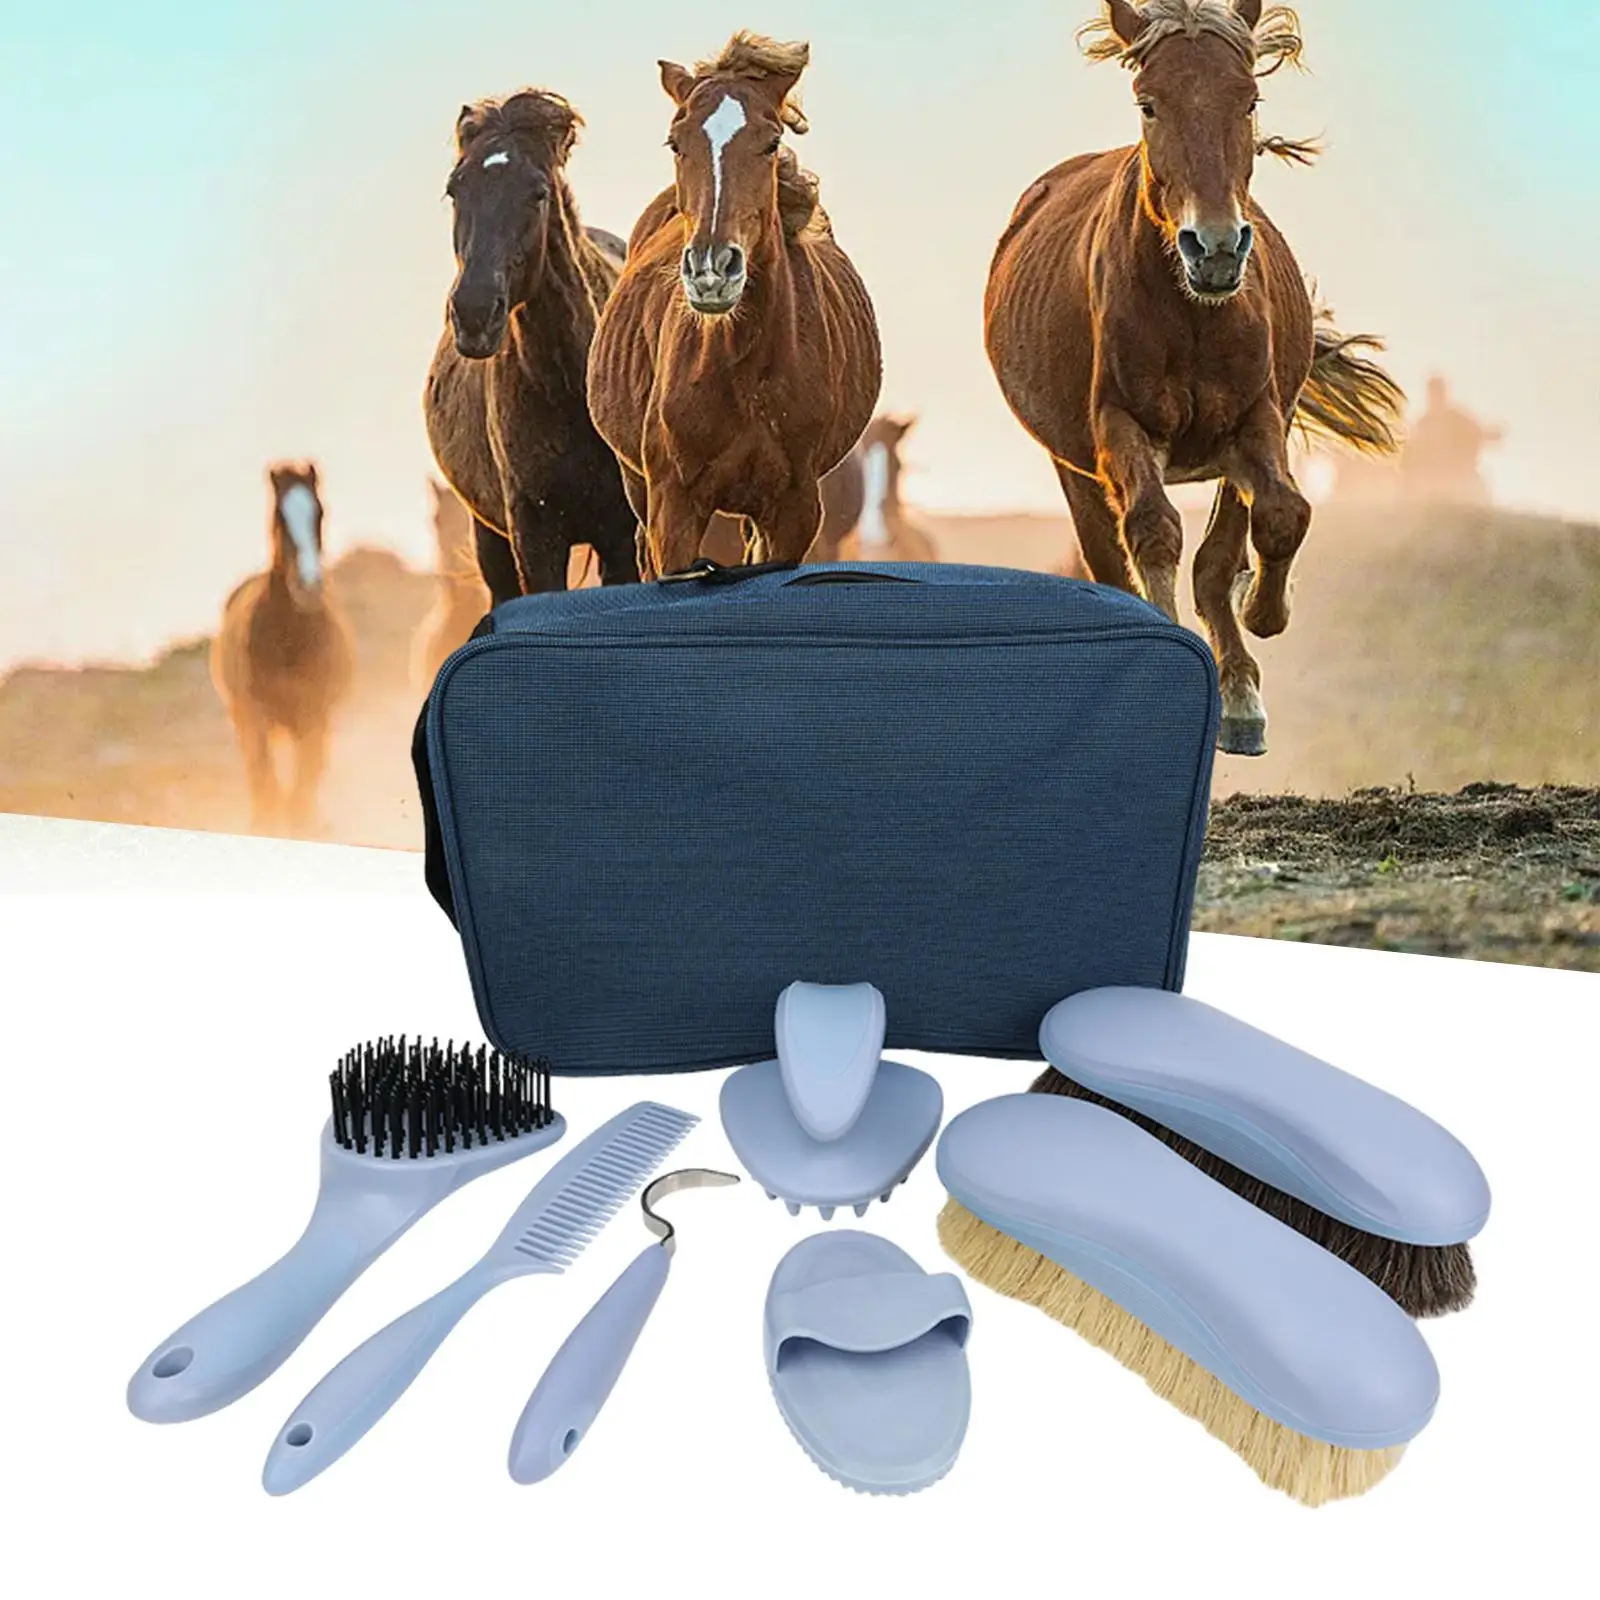 grooming-care-kit-para-iniciantes-suprimentos-de-banho-de-cavalos-equipamento-de-equitacao-conjunto-de-manutencao-escovas-de-limpeza-8x